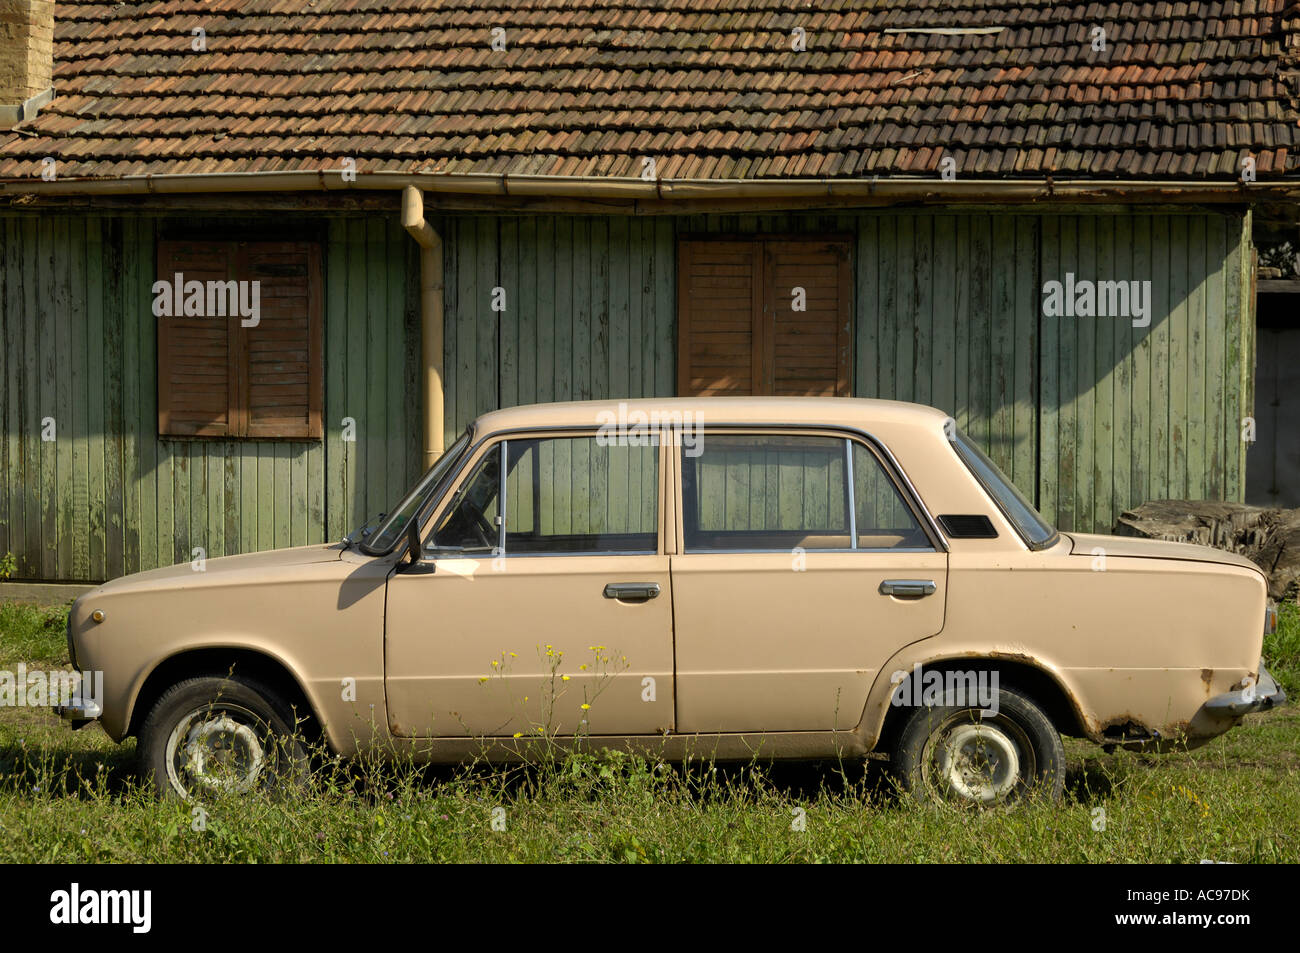 Old lada russian car -Fotos und -Bildmaterial in hoher Auflösung